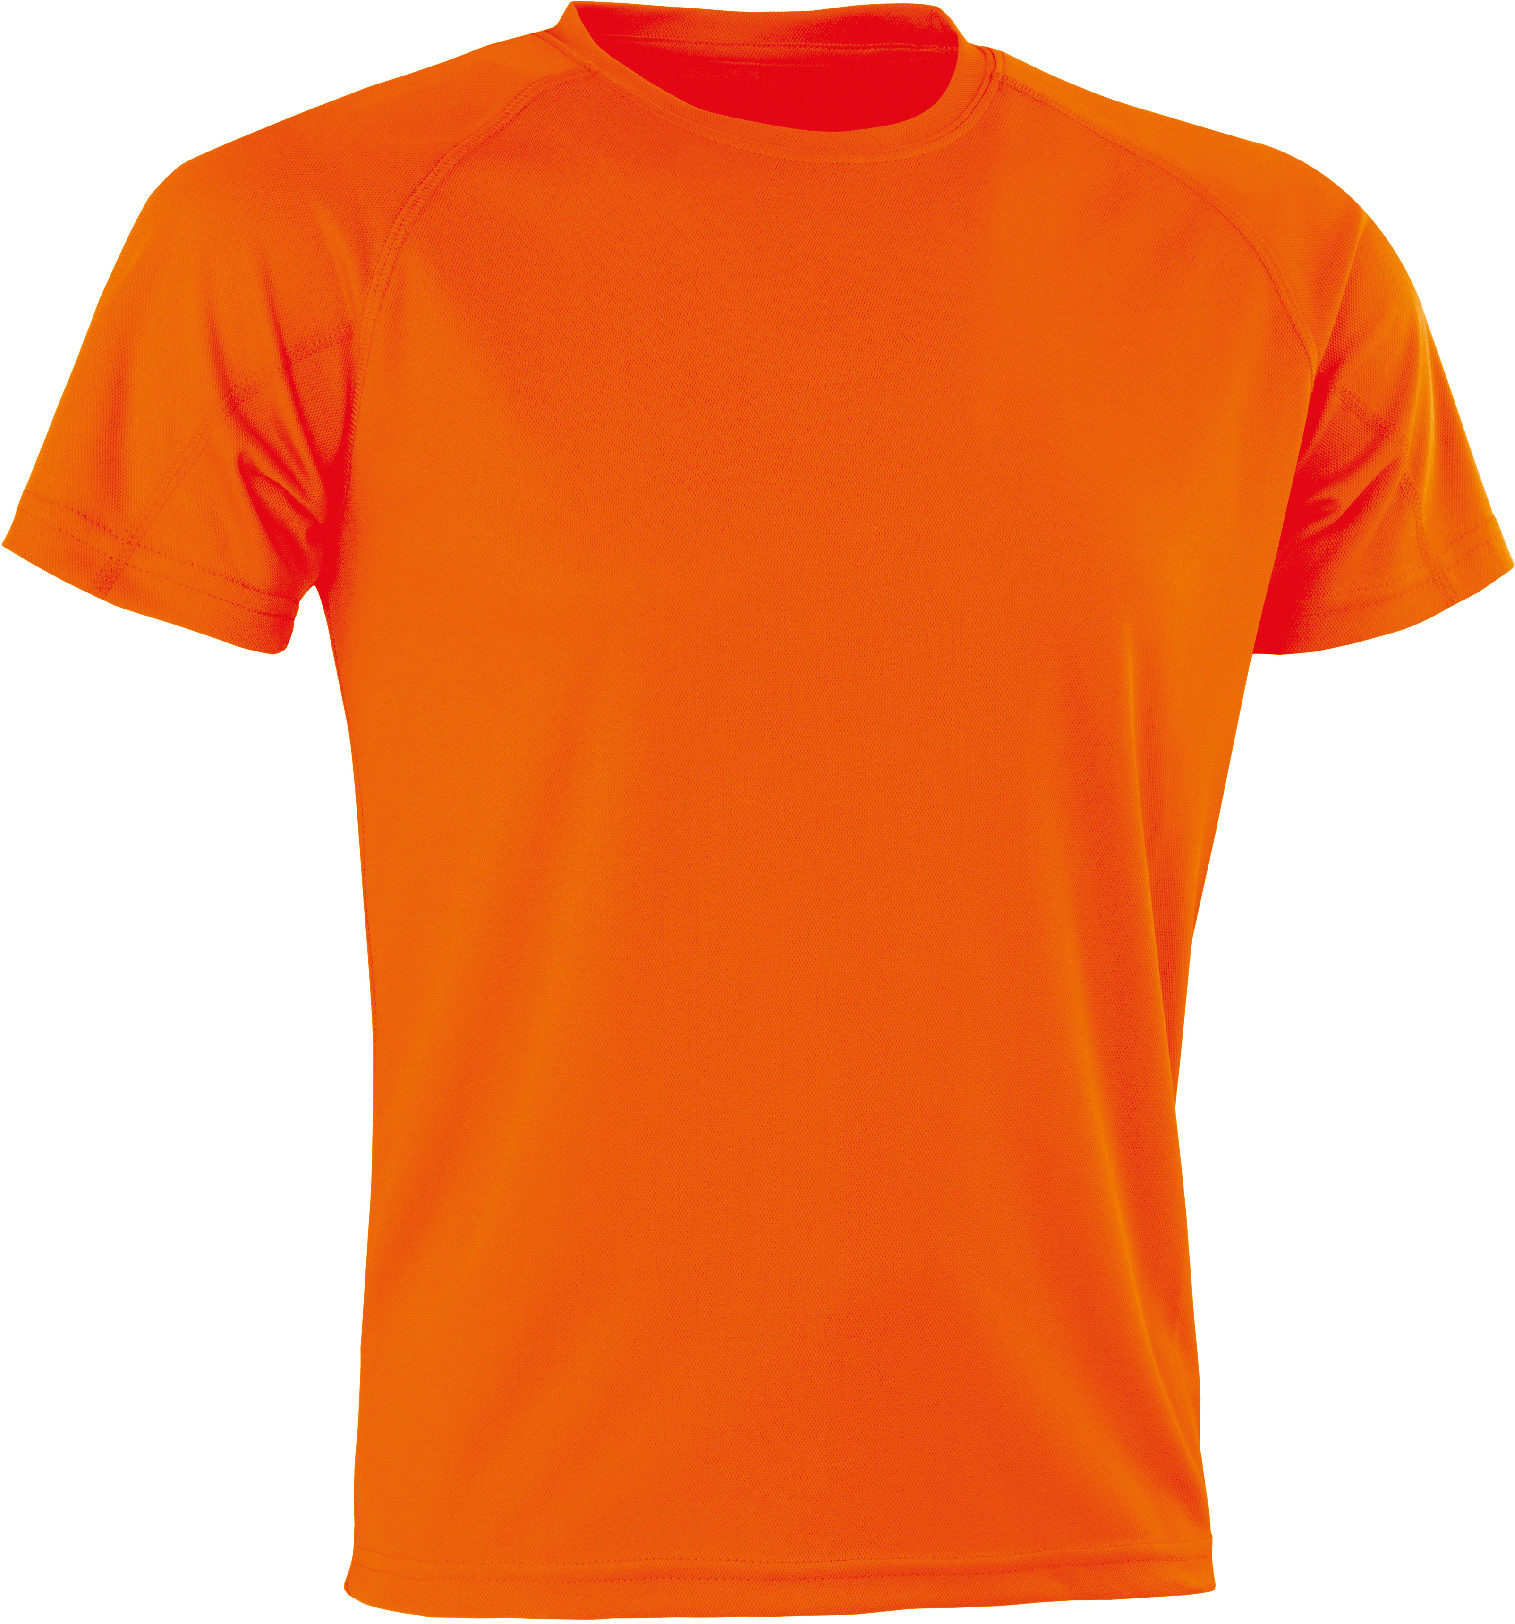 Sportovní tričko Aircool S287X Barva: neon orange, Velikost: M